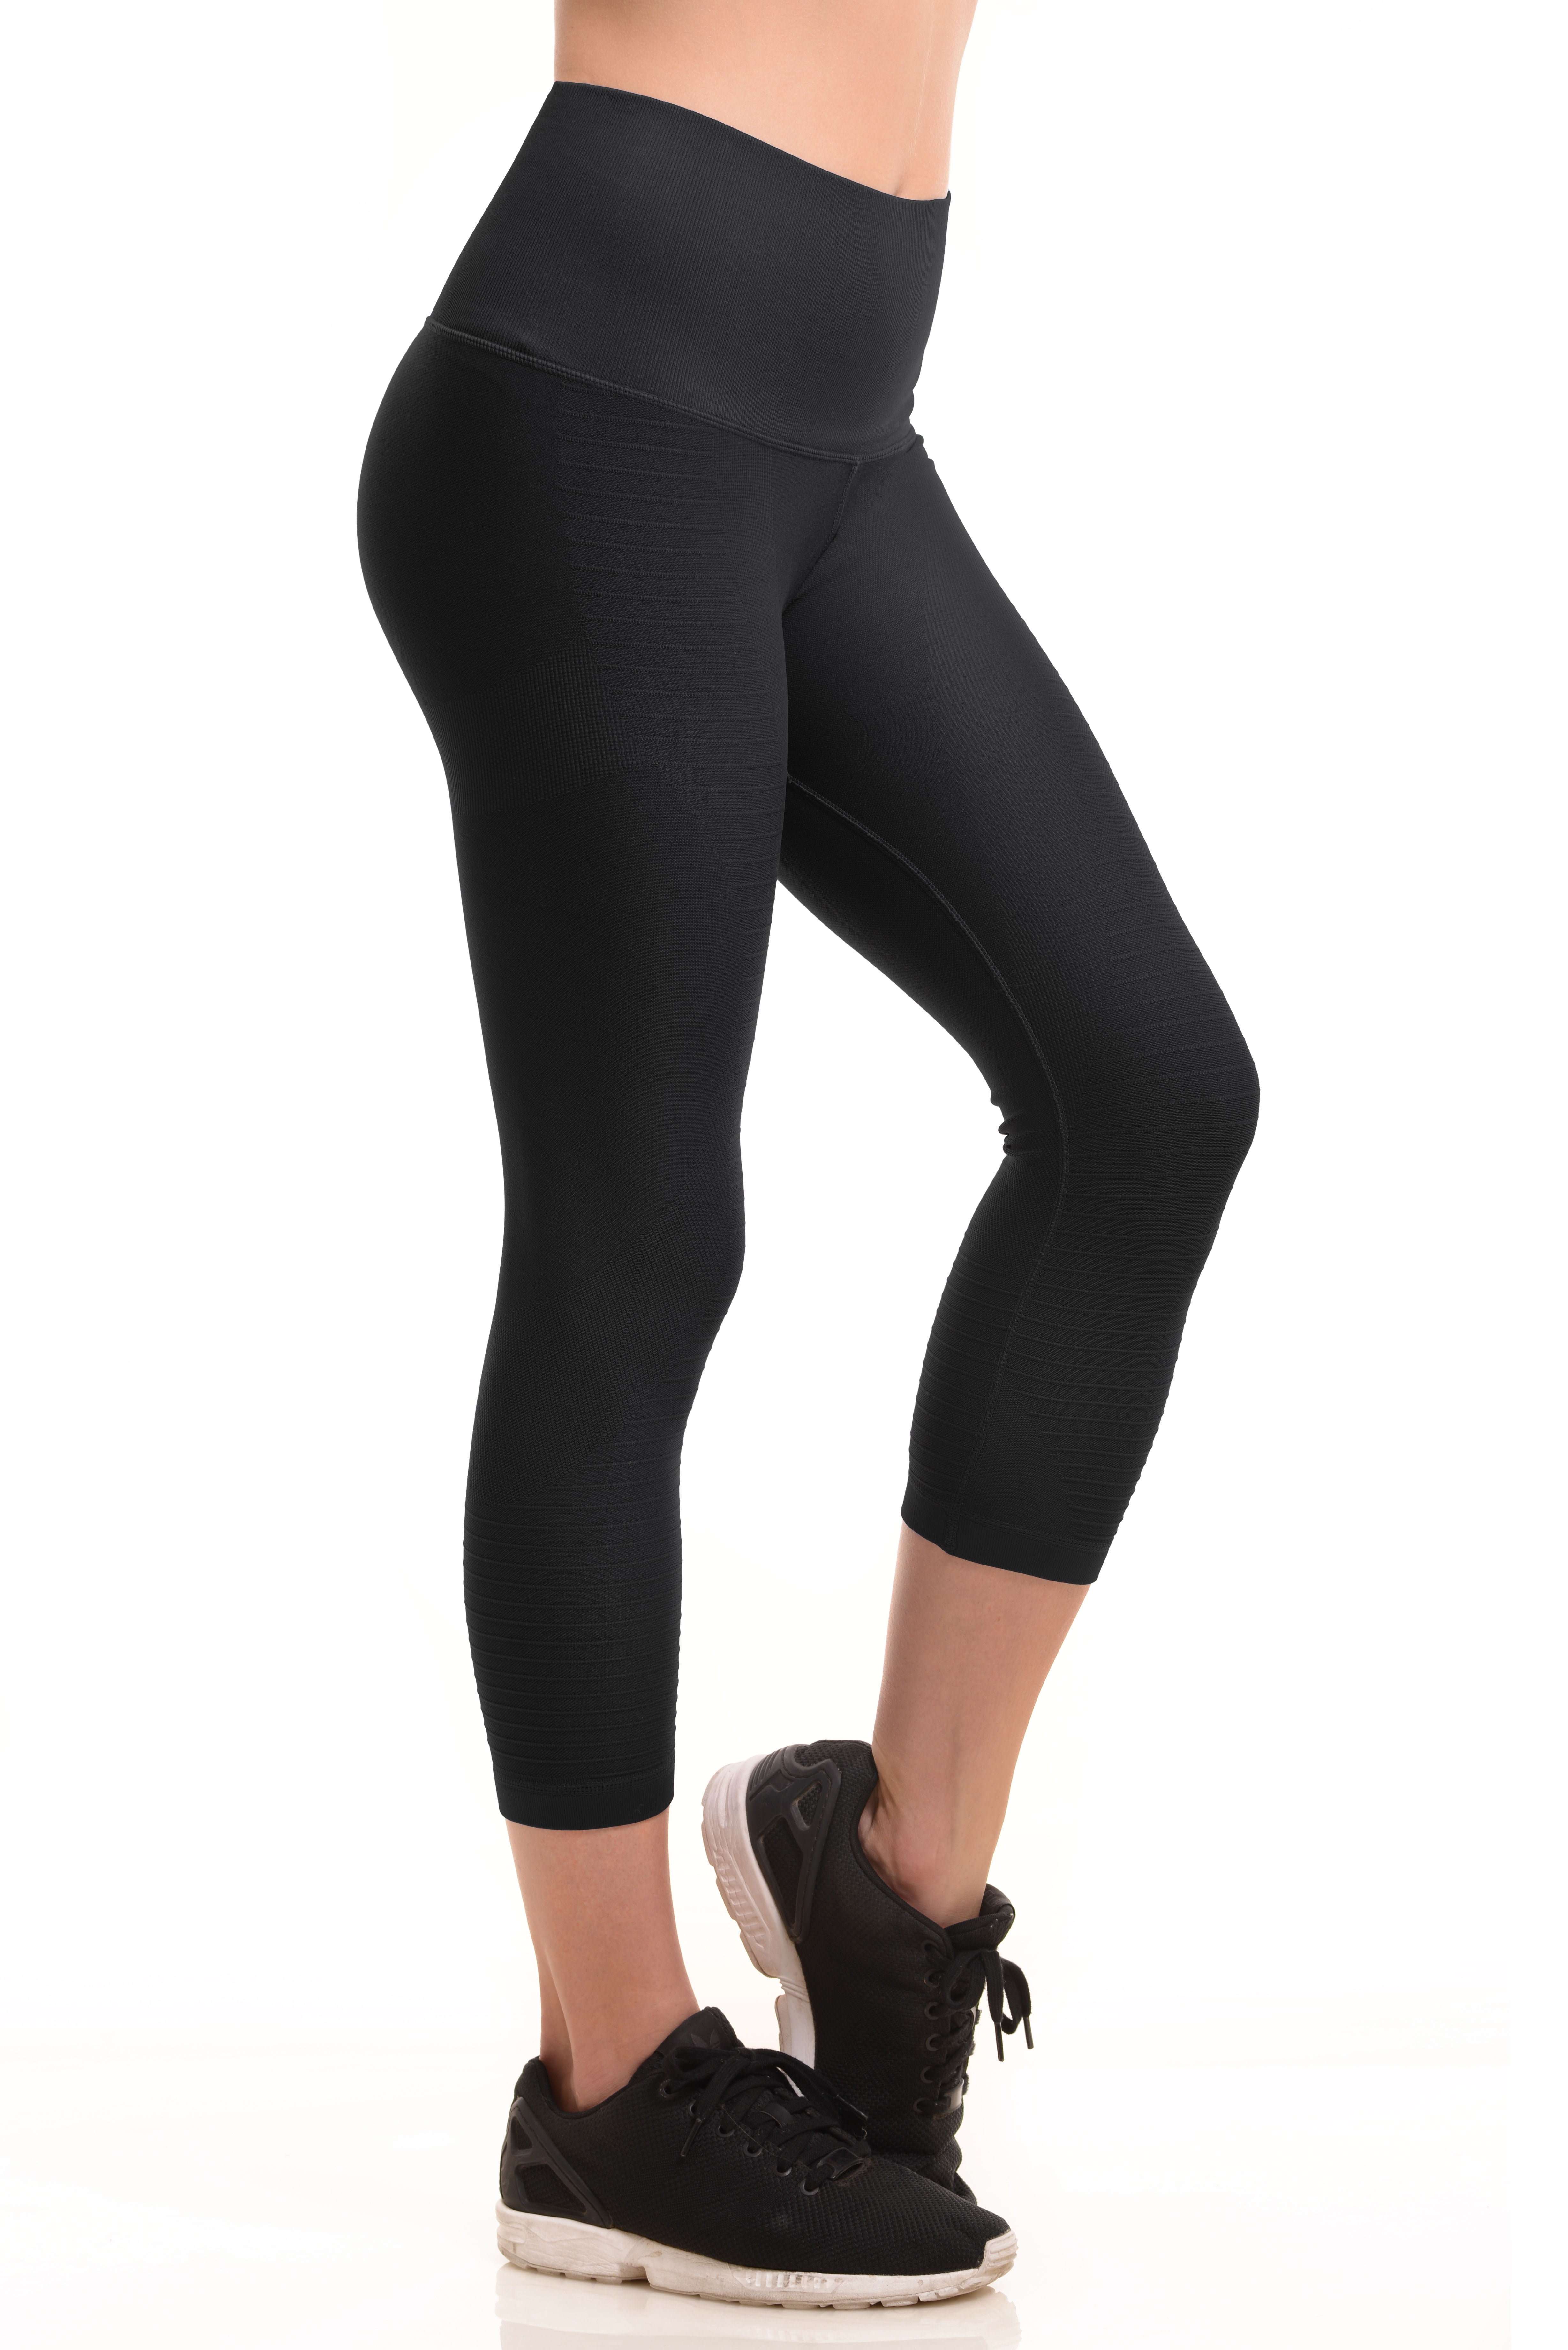 Women's Active Compression Capri Leggings (Black, Large/Extra